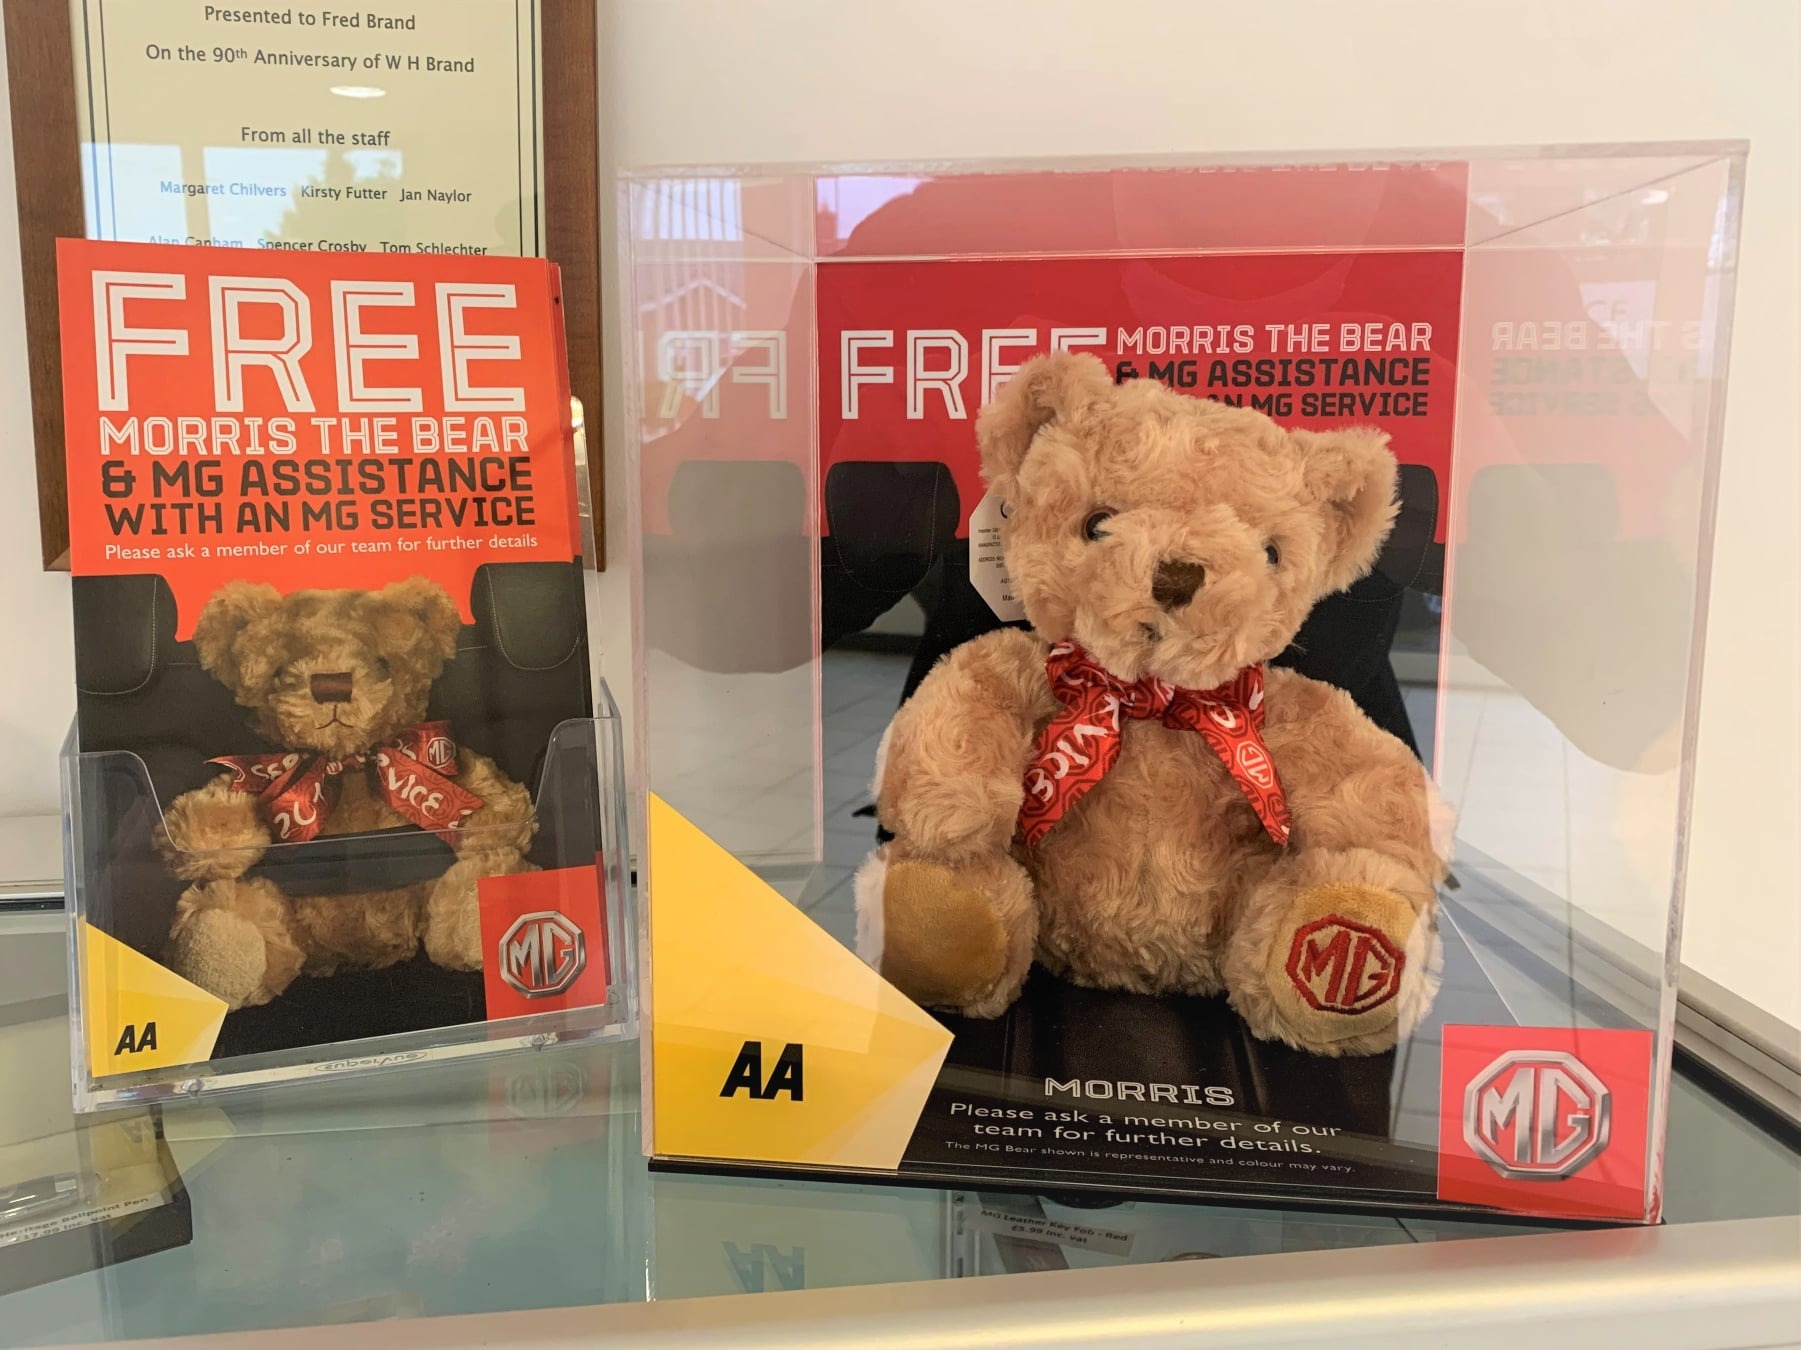 Free AA Cover & a Morris The Bear!